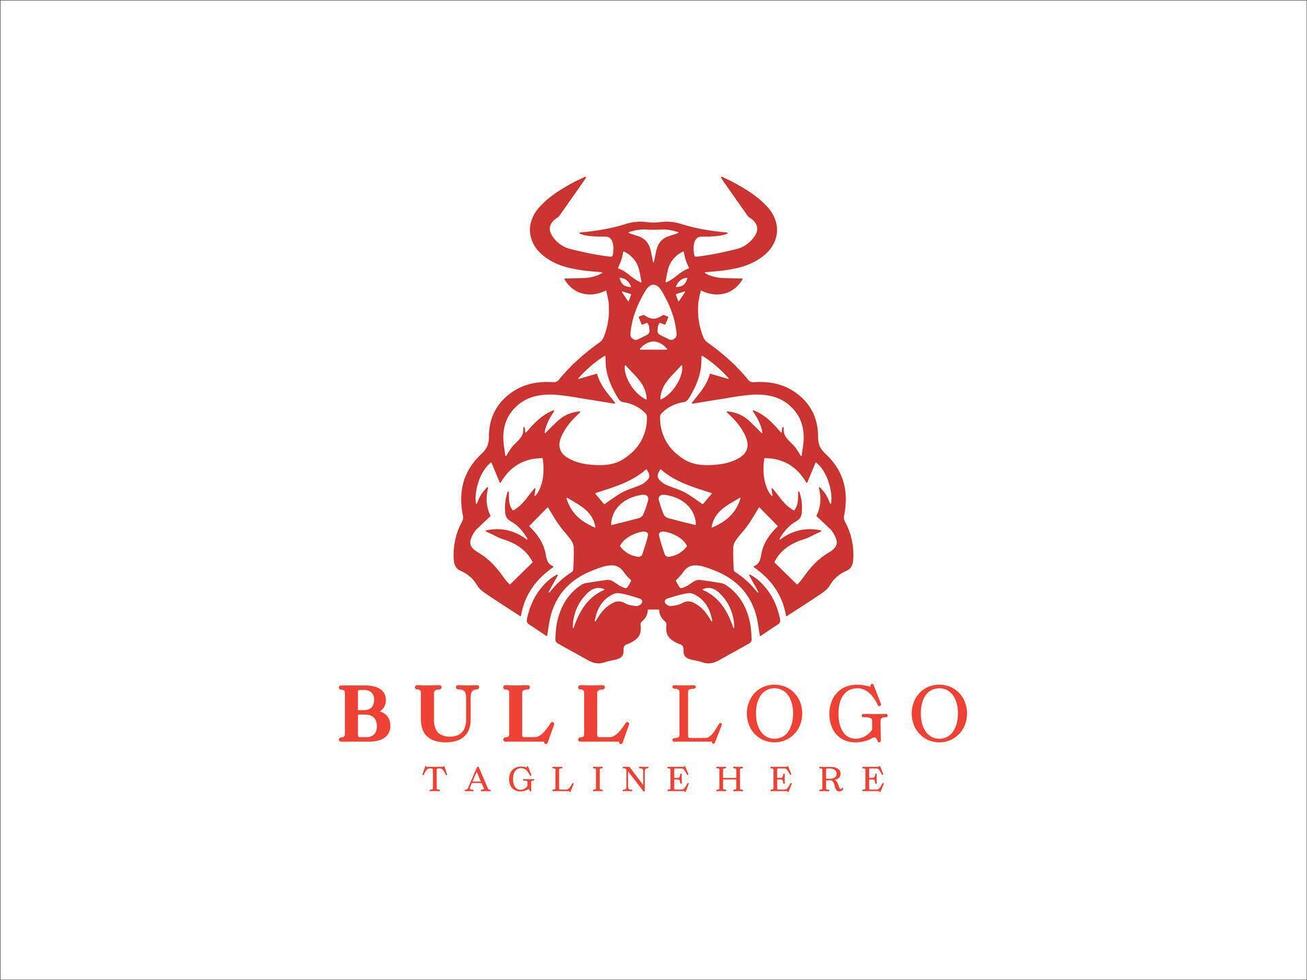 Strong Bull Logo vector